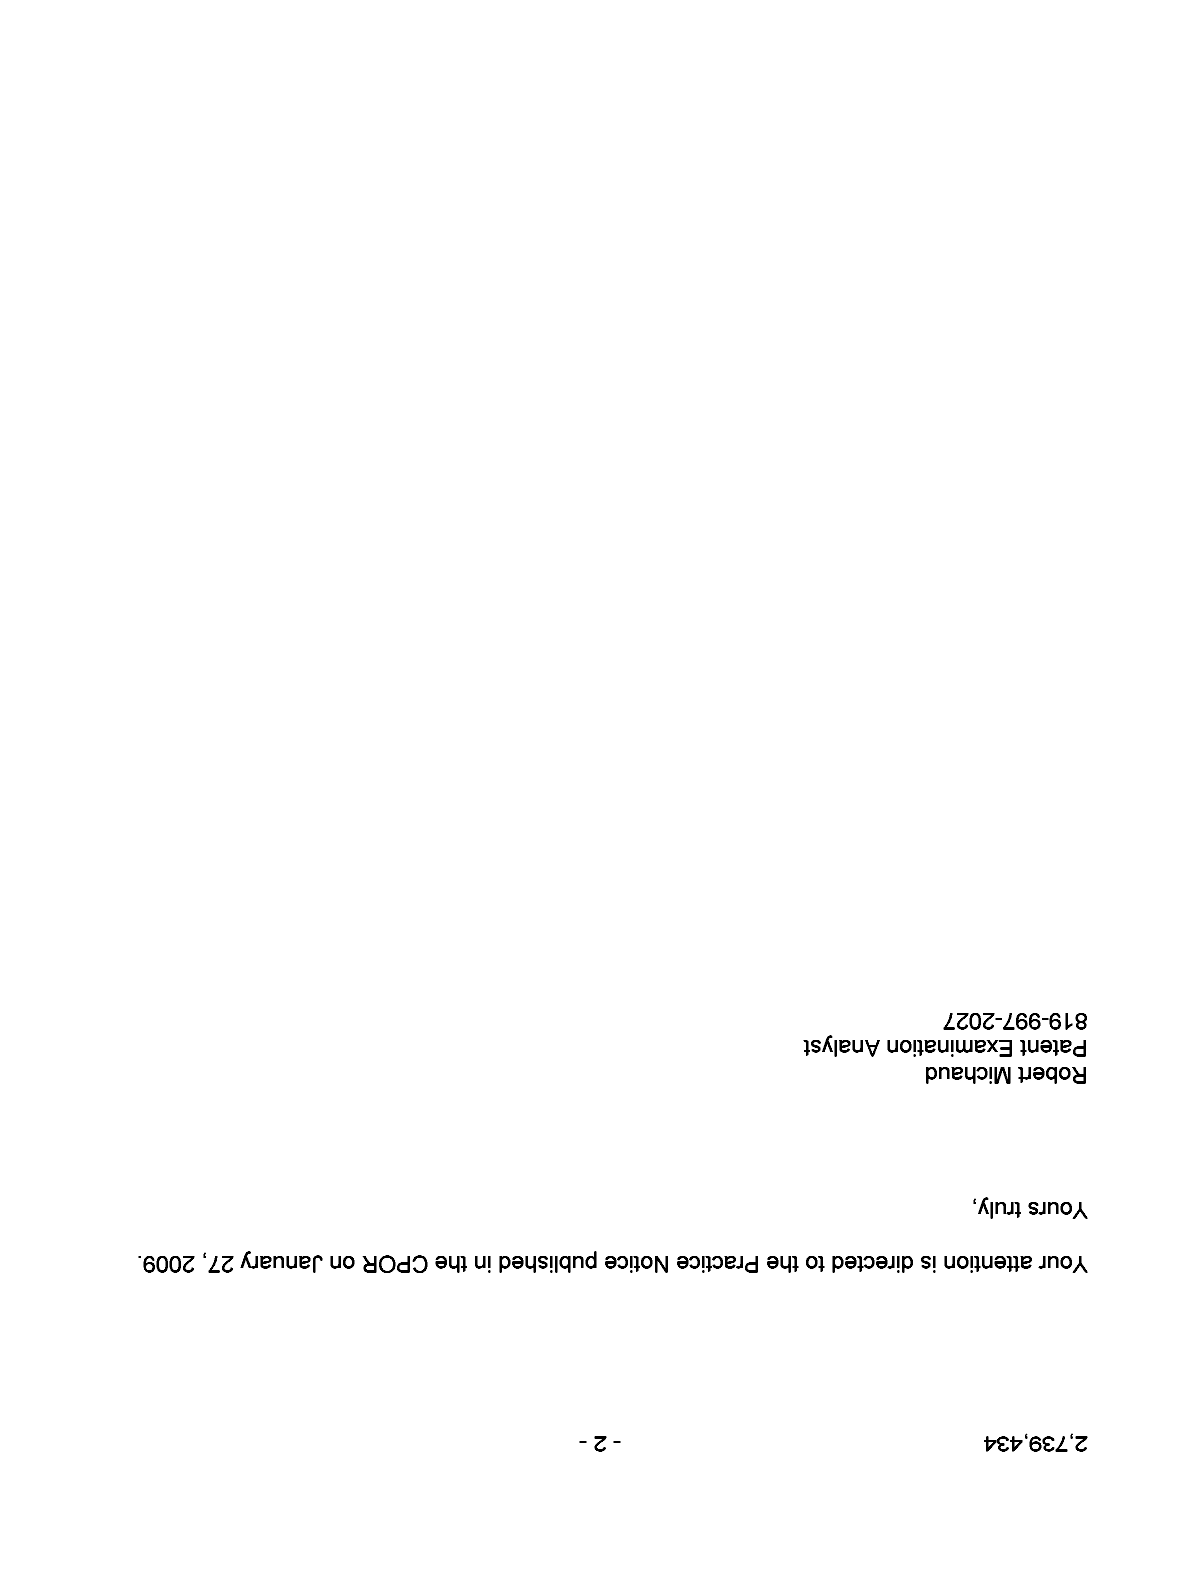 Canadian Patent Document 2739434. Correspondence 20111204. Image 2 of 2